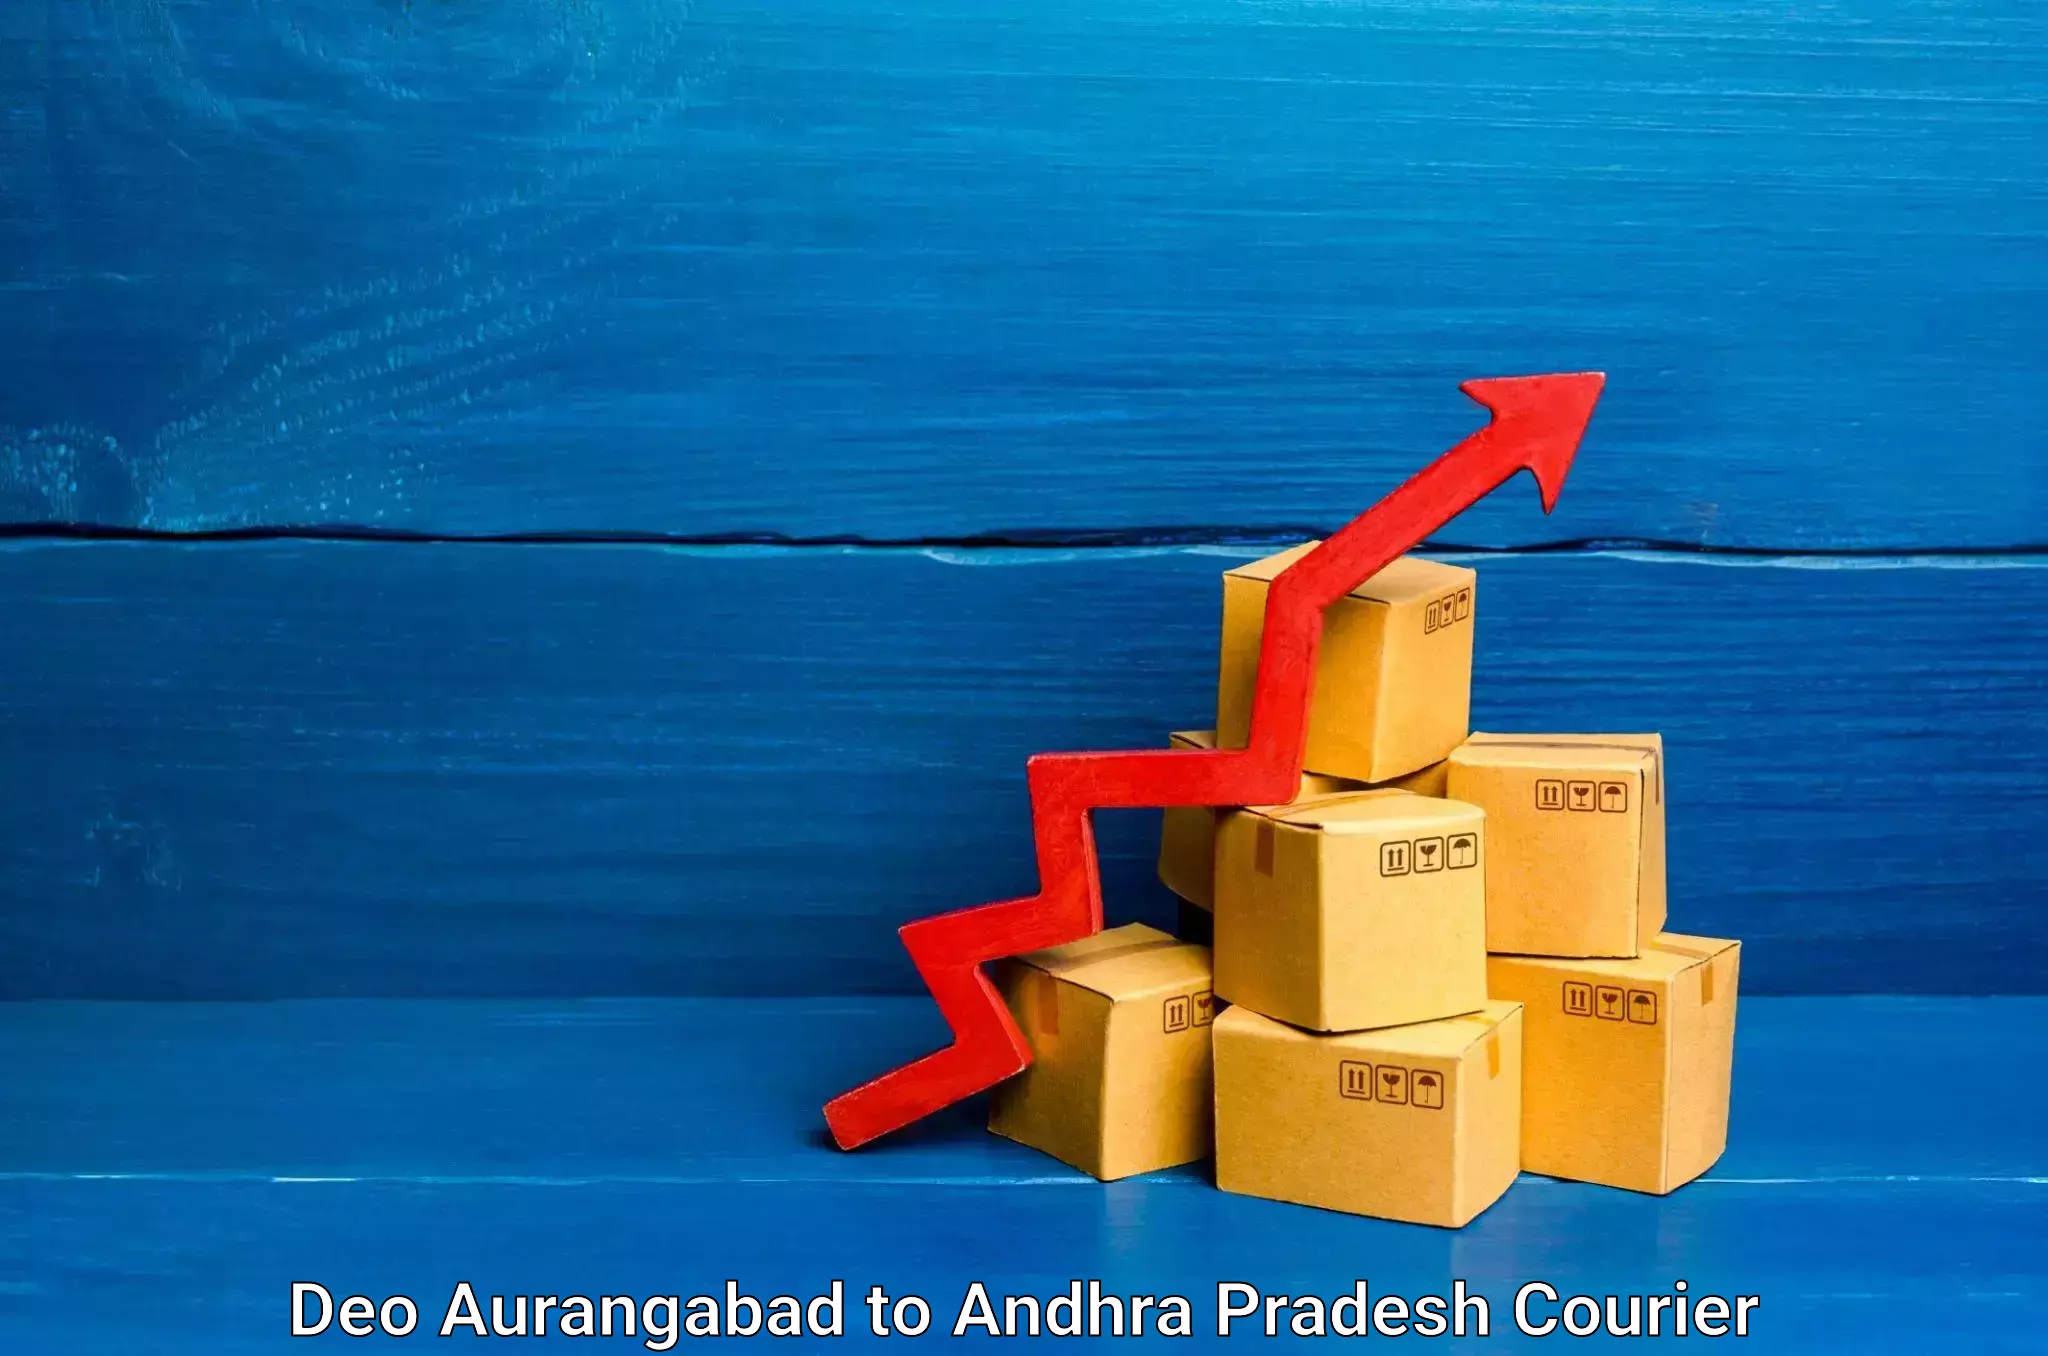 Hassle-free relocation Deo Aurangabad to Andhra Pradesh